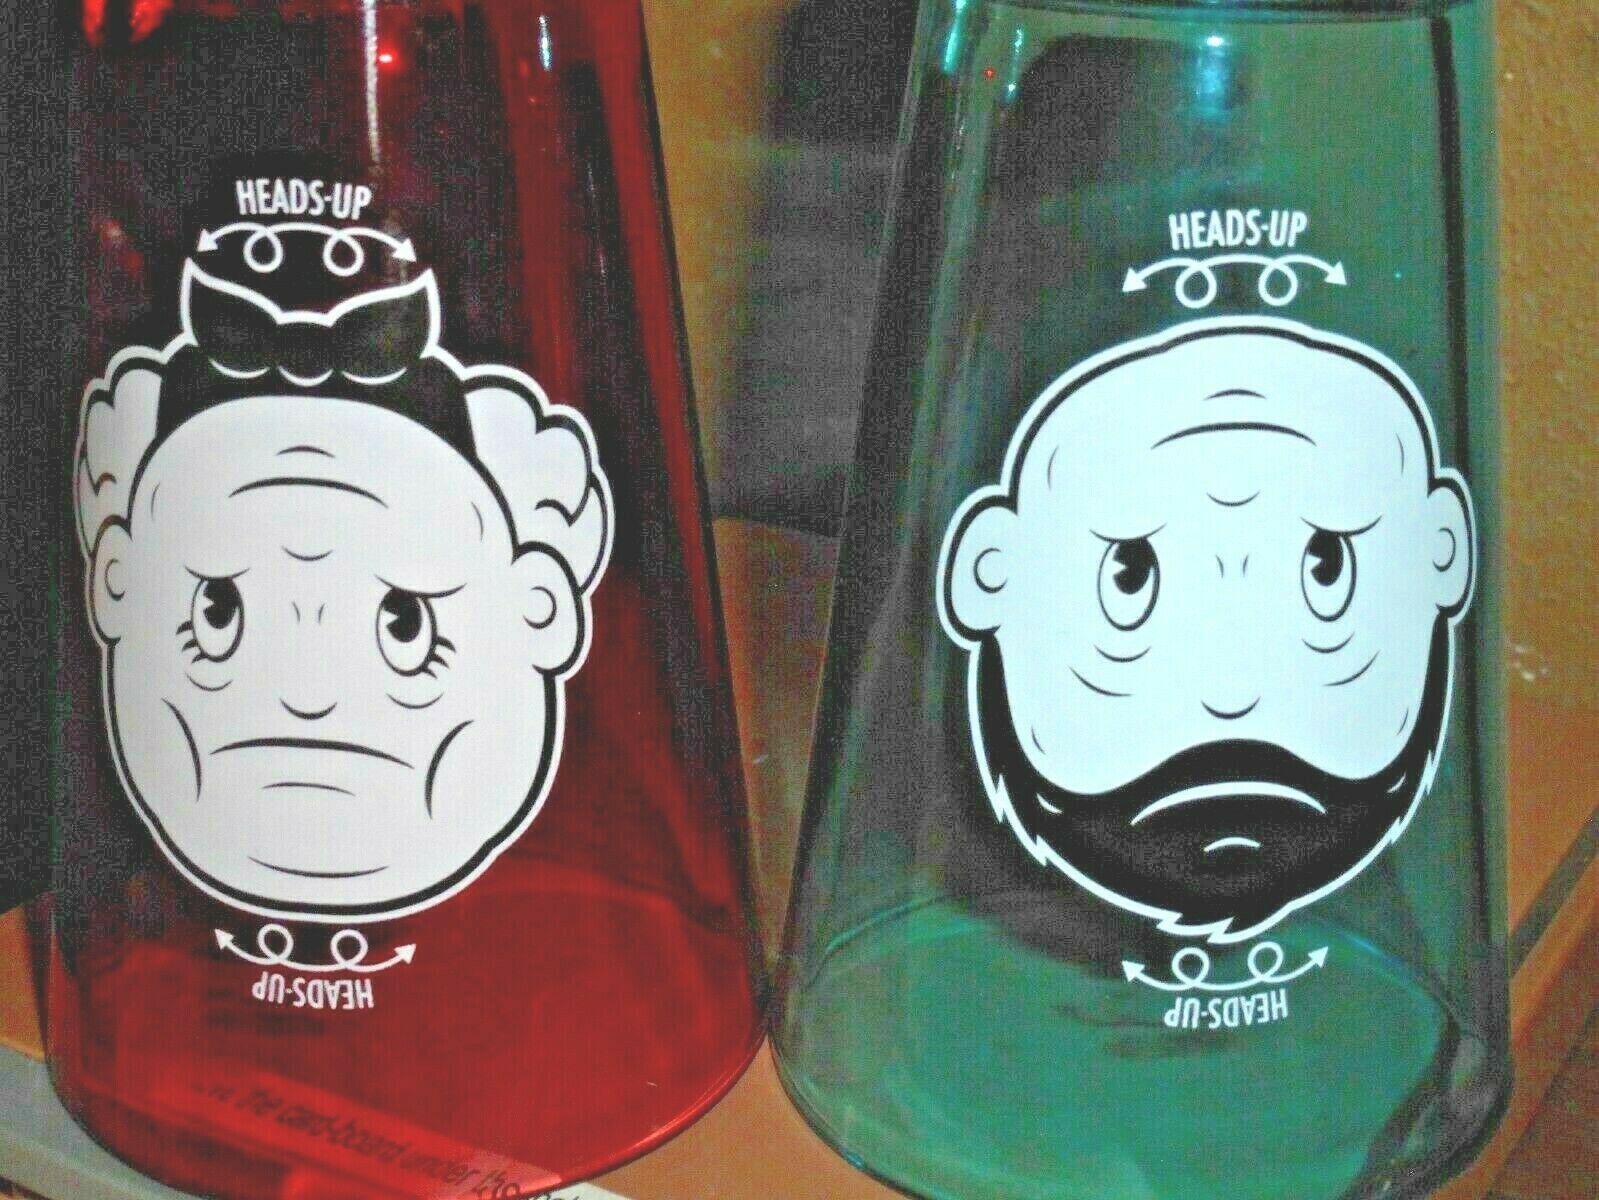 HEADS UP 2010 Fred & Friends Face Childs Drinking Glass Jason Amendolata Design - $12.99